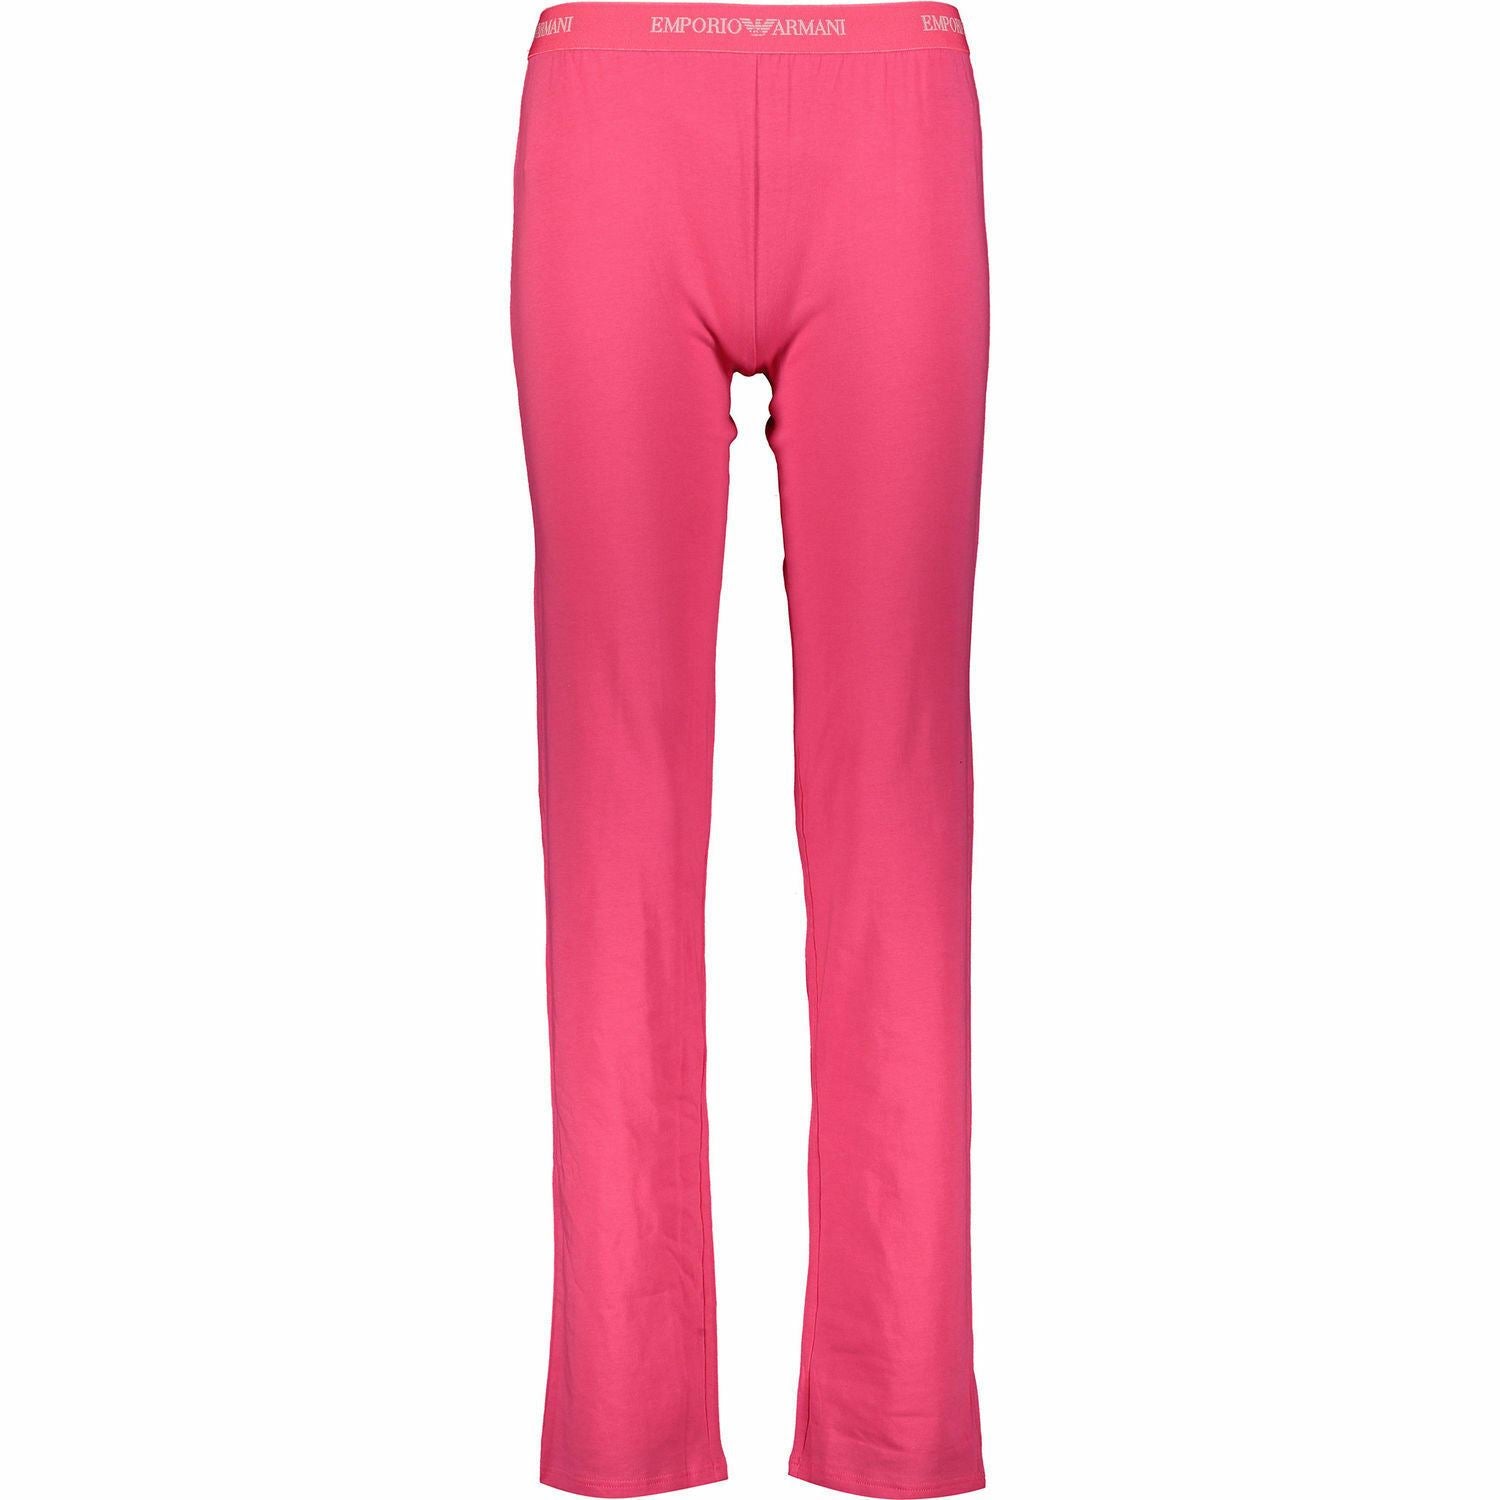 EMPORIO ARMANI Nightwear Womens Pink Lounge Joggers size M /size L /size XL